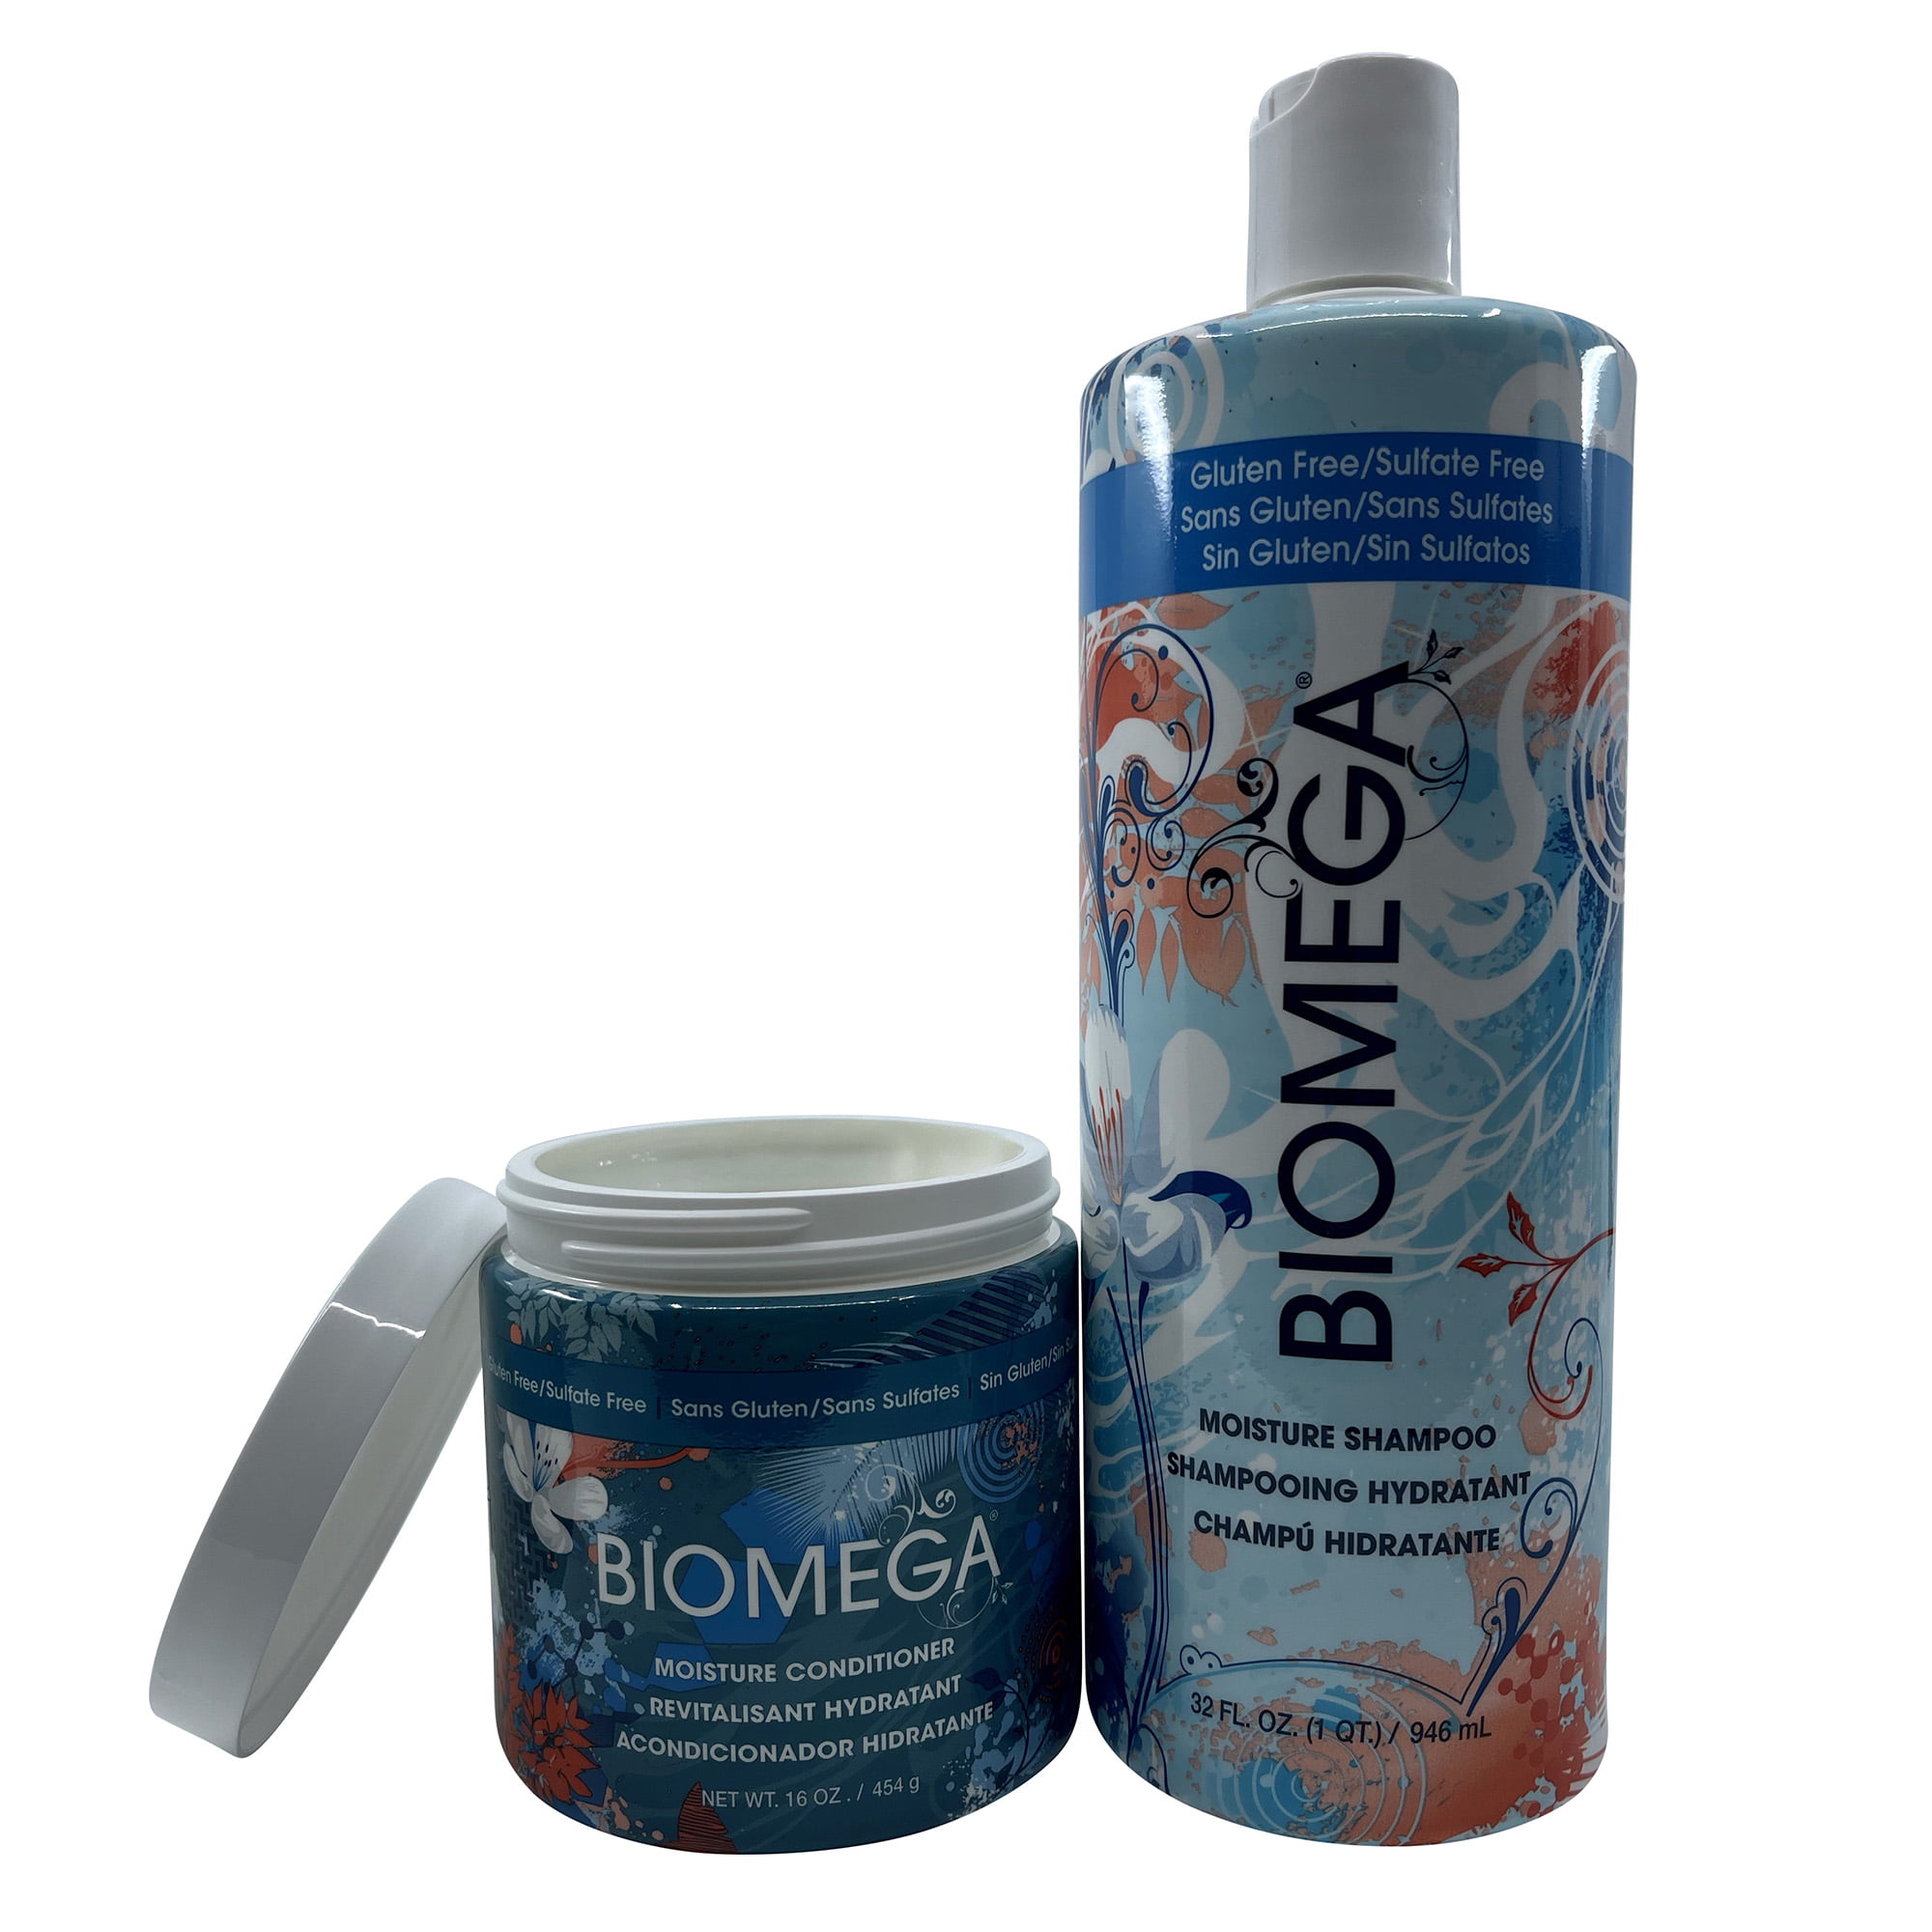 stimulere eksekverbar Validering Aquage Biomega Moisture Shampoo 32 OZ & Moisture Conditioner 16 OZ -  Walmart.com